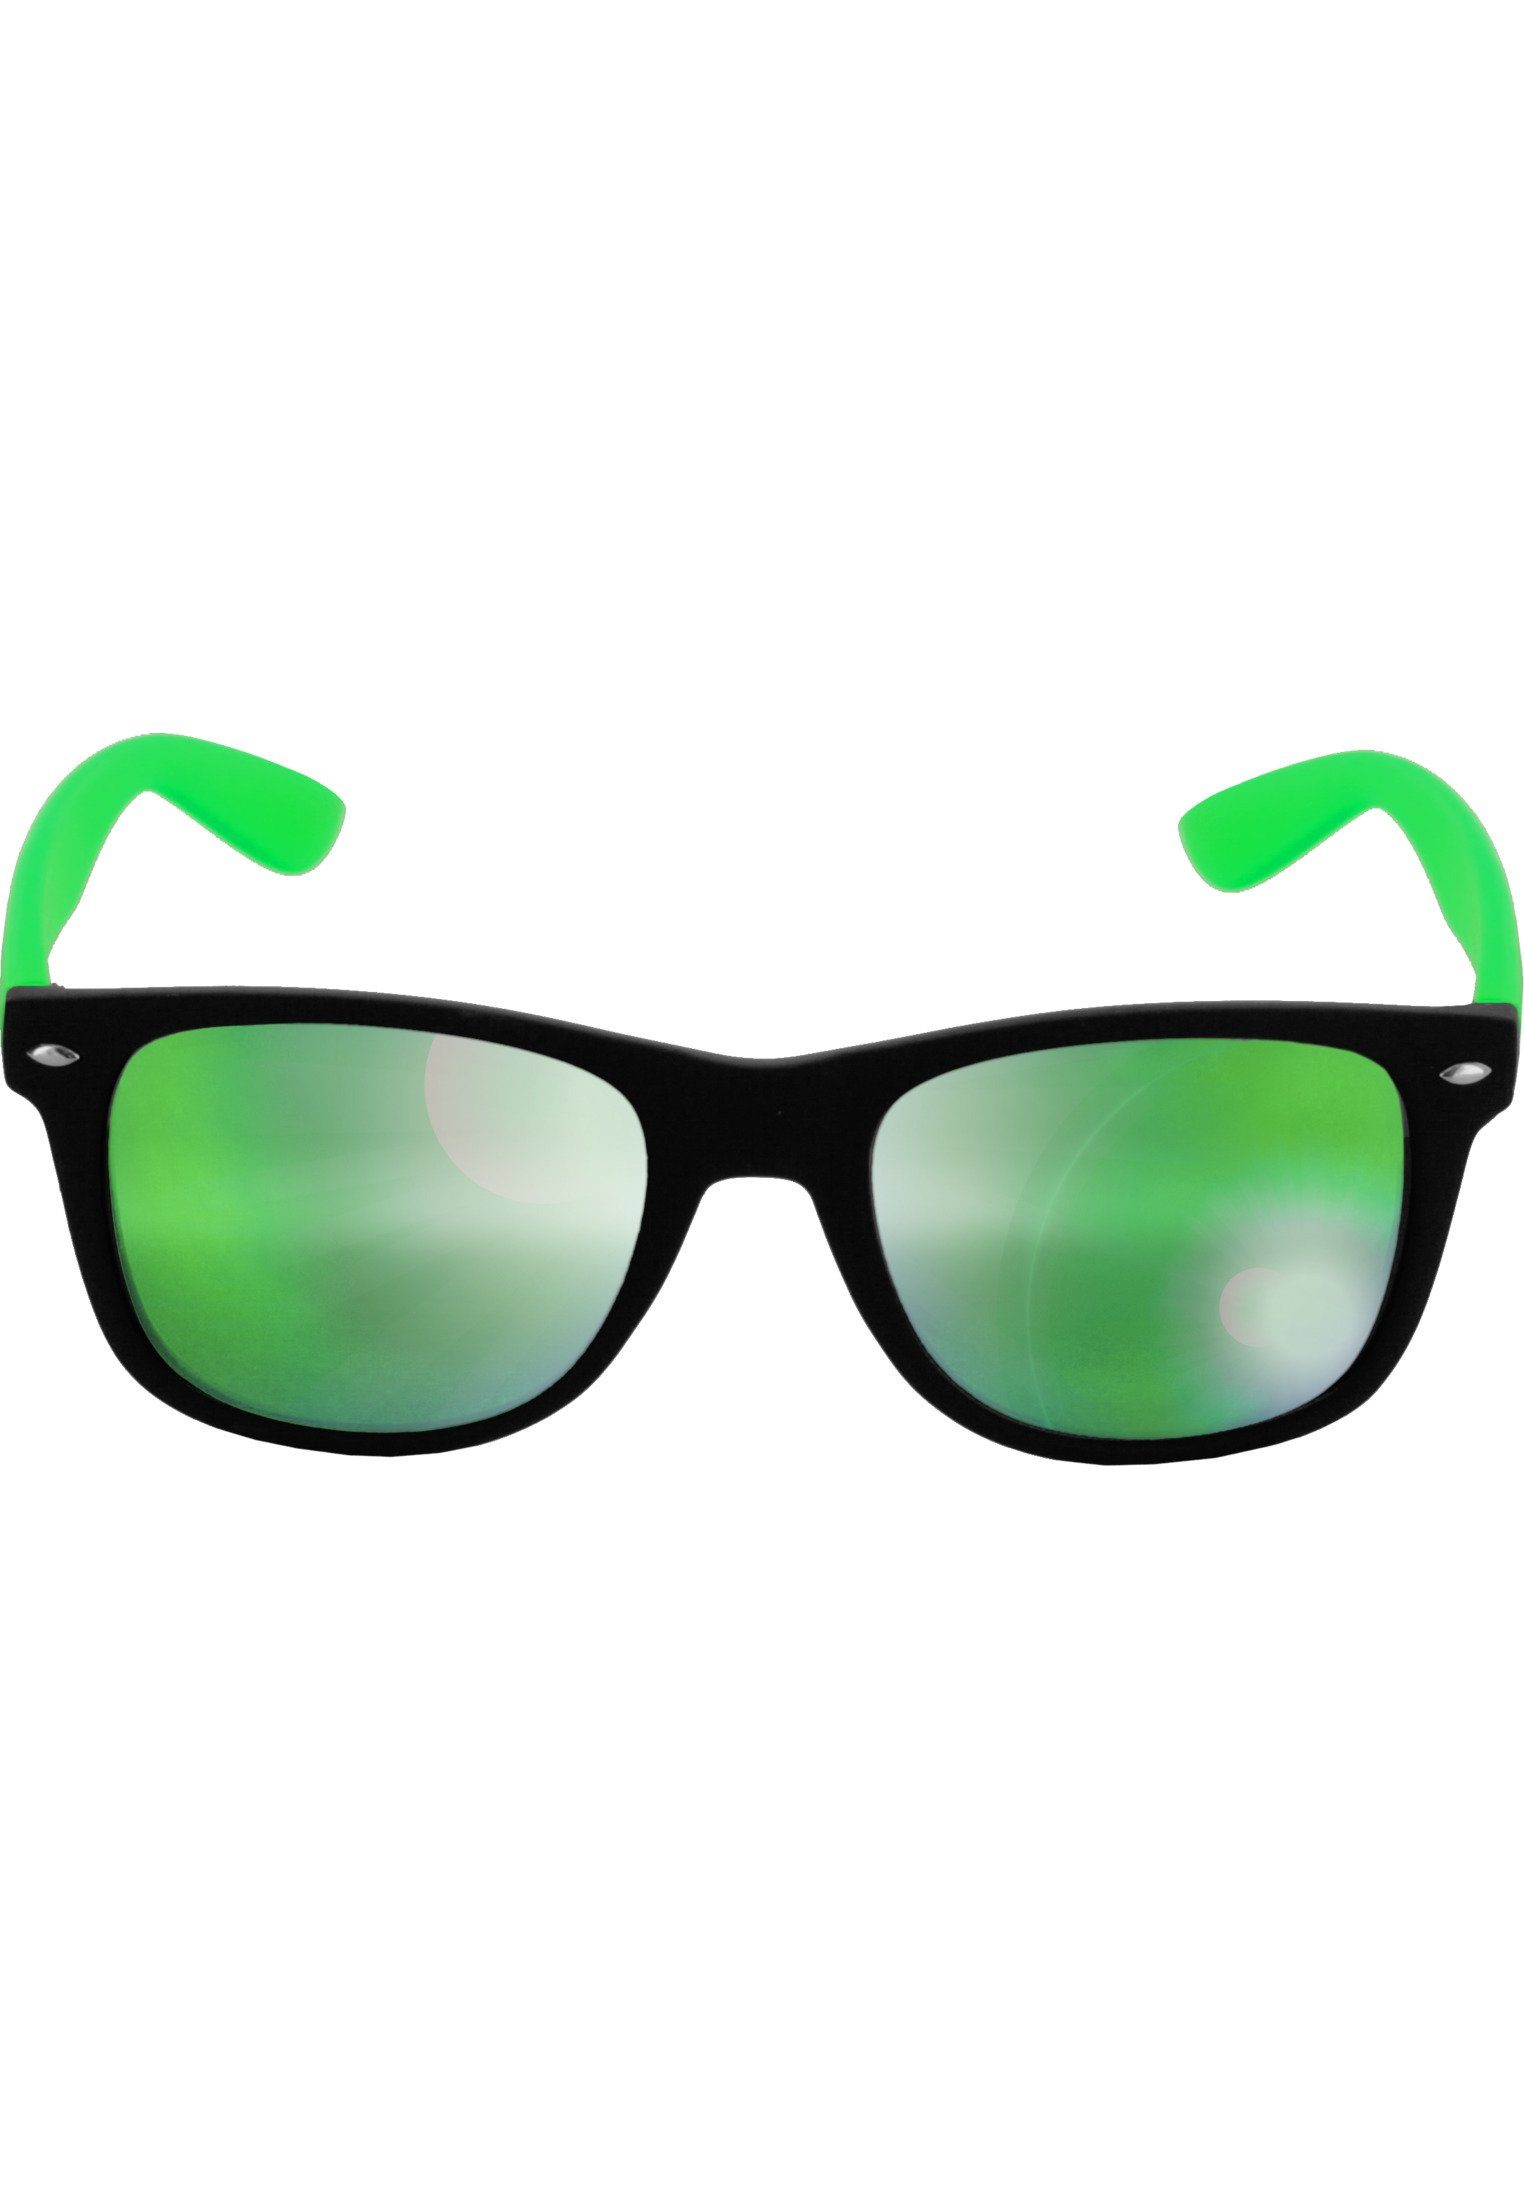 MSTRDS Sonnenbrille Accessoires Sunglasses Likoma Mirror blk/lgr | Sonnenbrillen